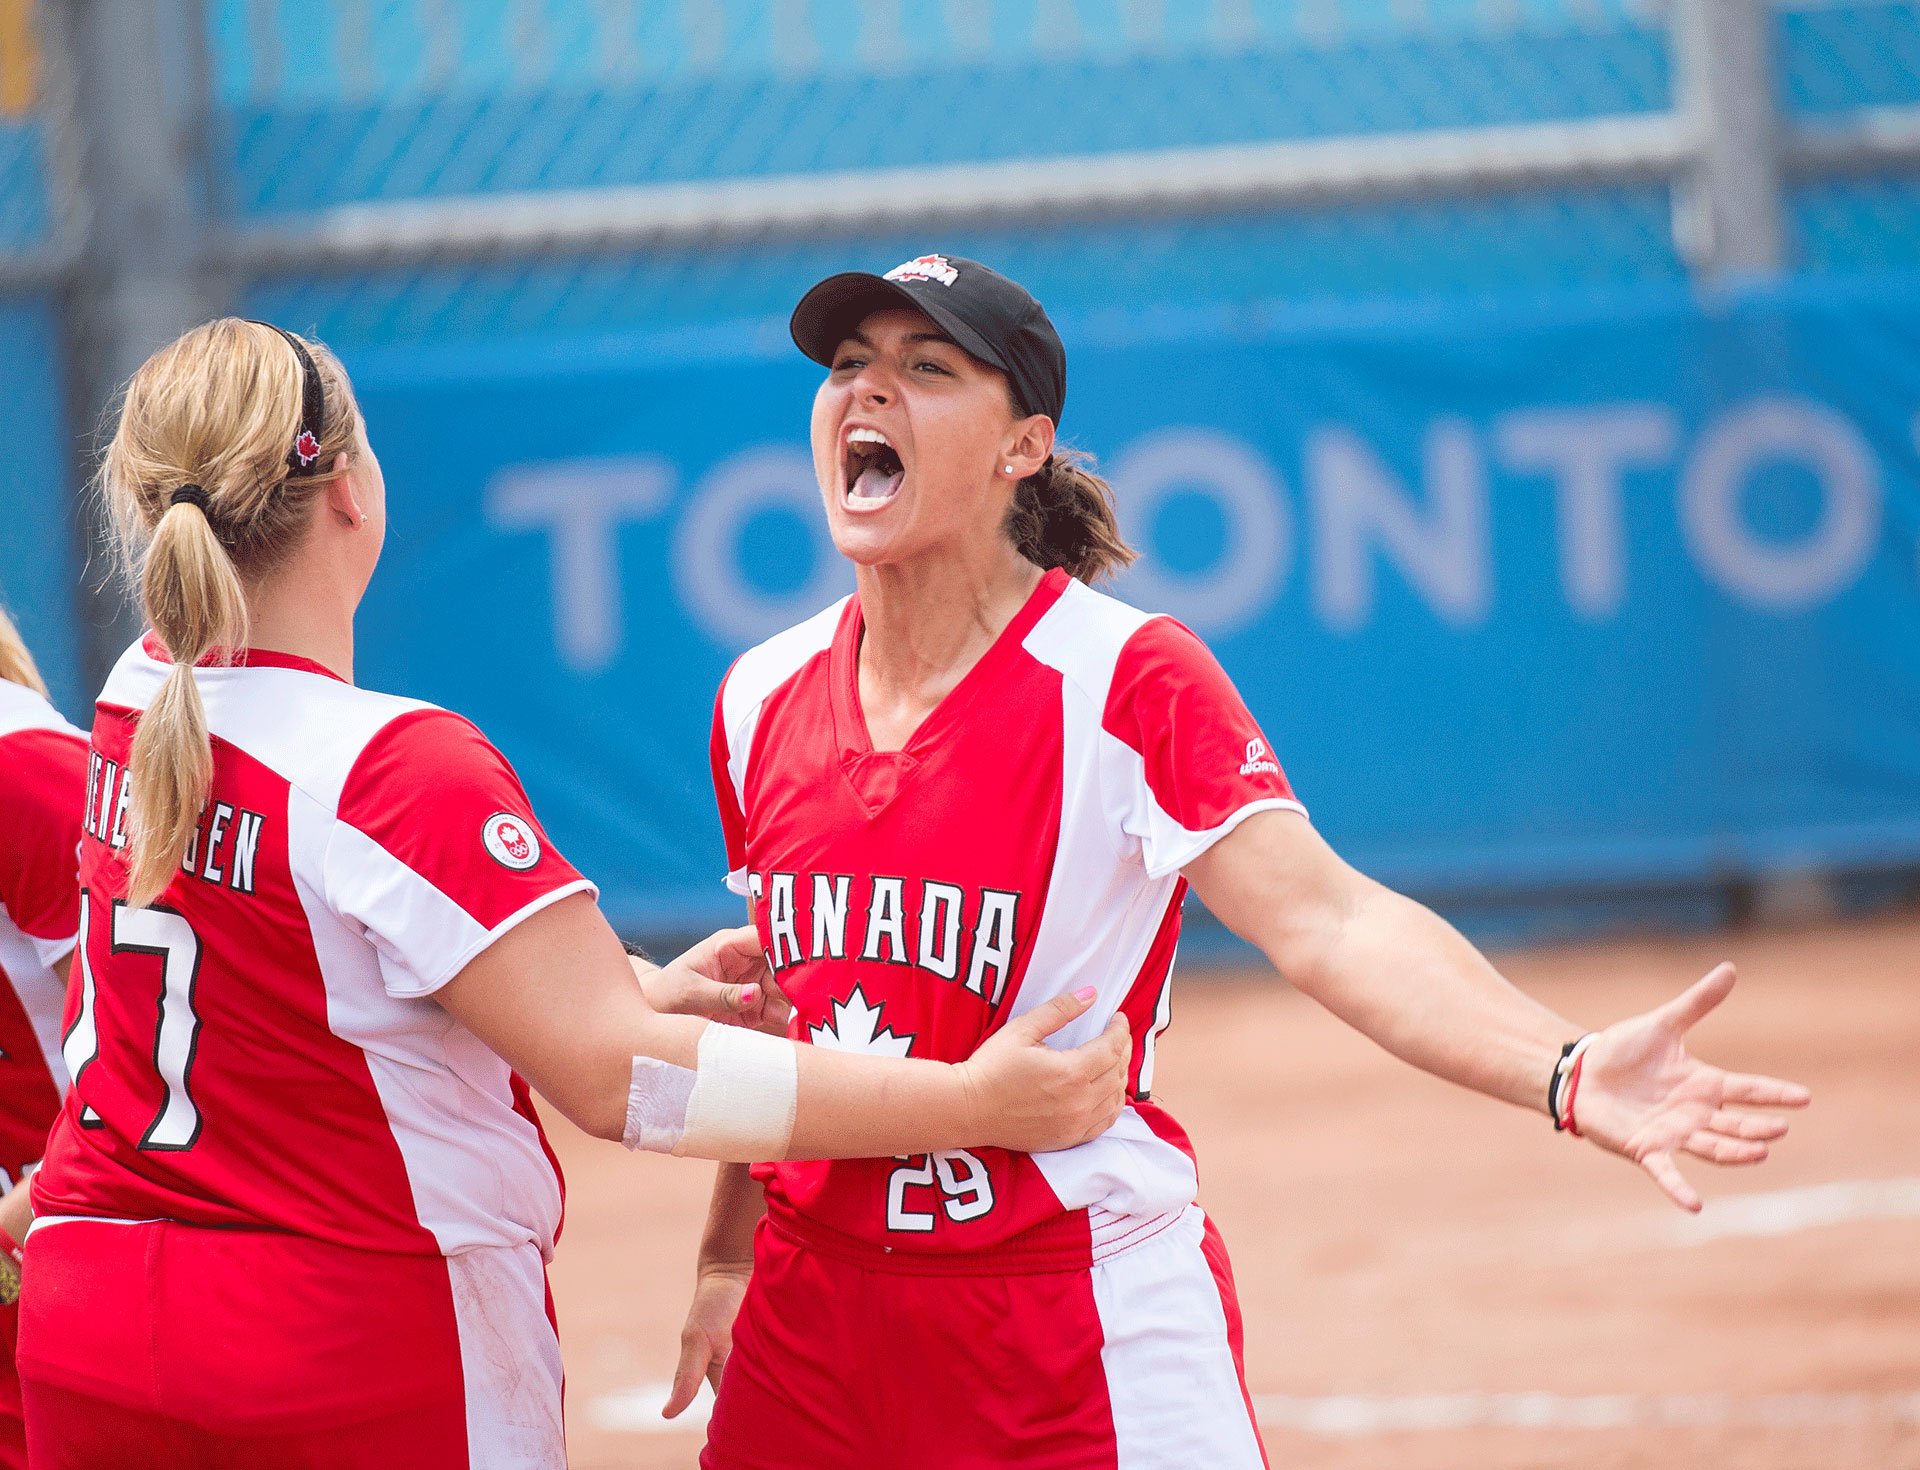 Canada women&#x27;s softball team